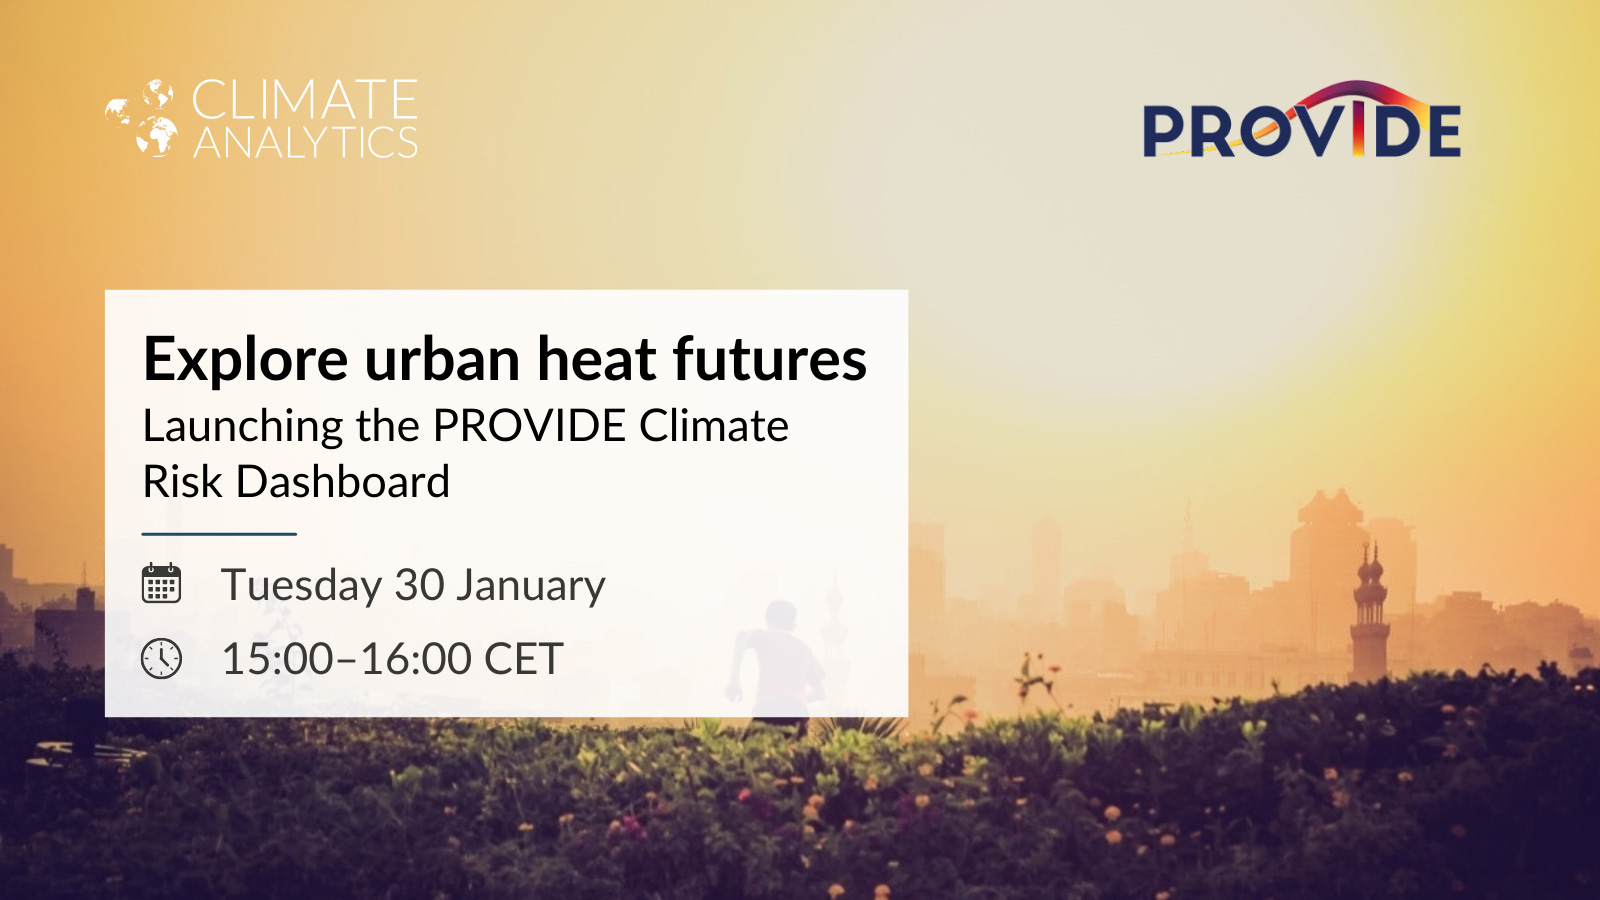 PROVIDE - Explore urban heat futures